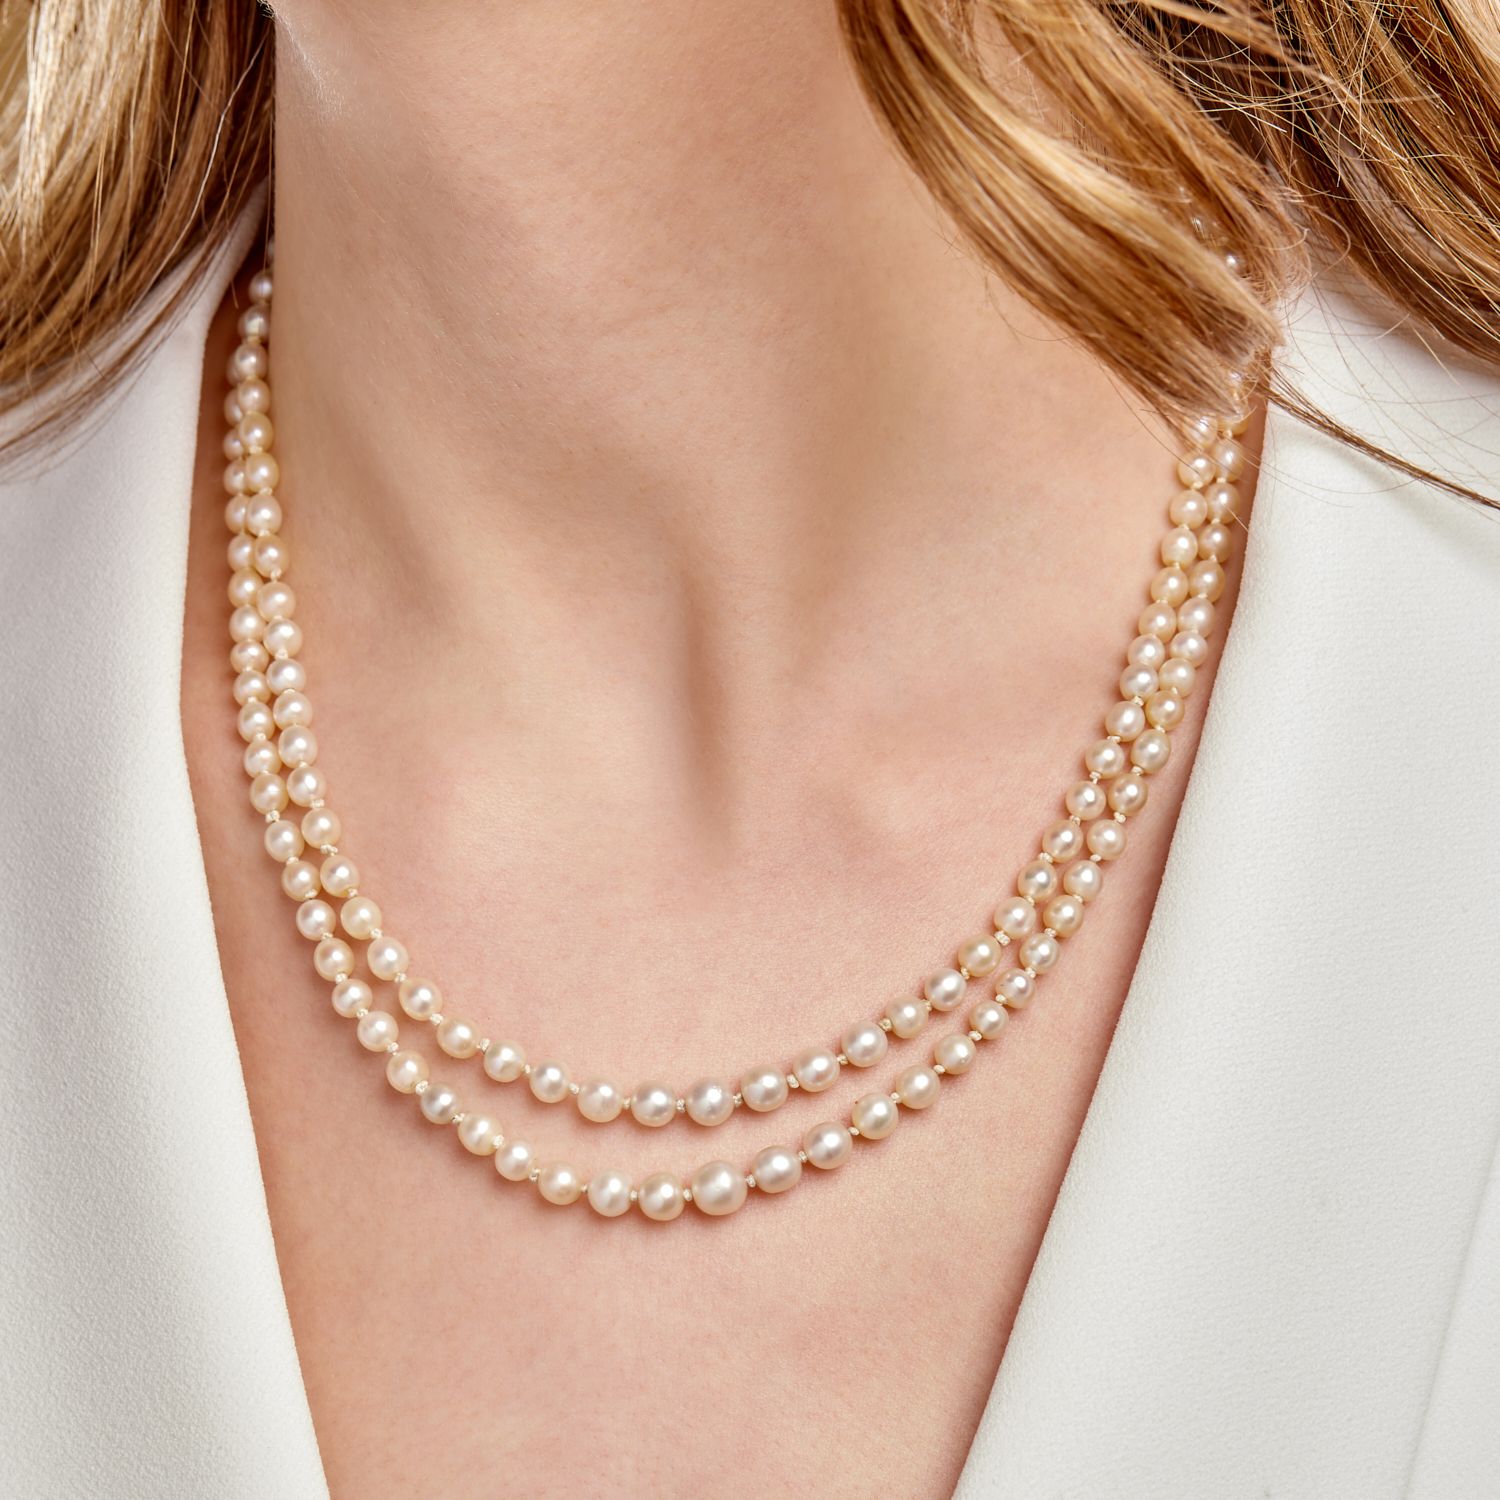 Null 双股珍珠项链
一百五十六颗精美的珍珠分两行。18K黄金搭扣。 
毛重：28.47克。
长度：43厘米。
报告LFG，根据其意见，说明：海水的优质珍珠。&hellip;